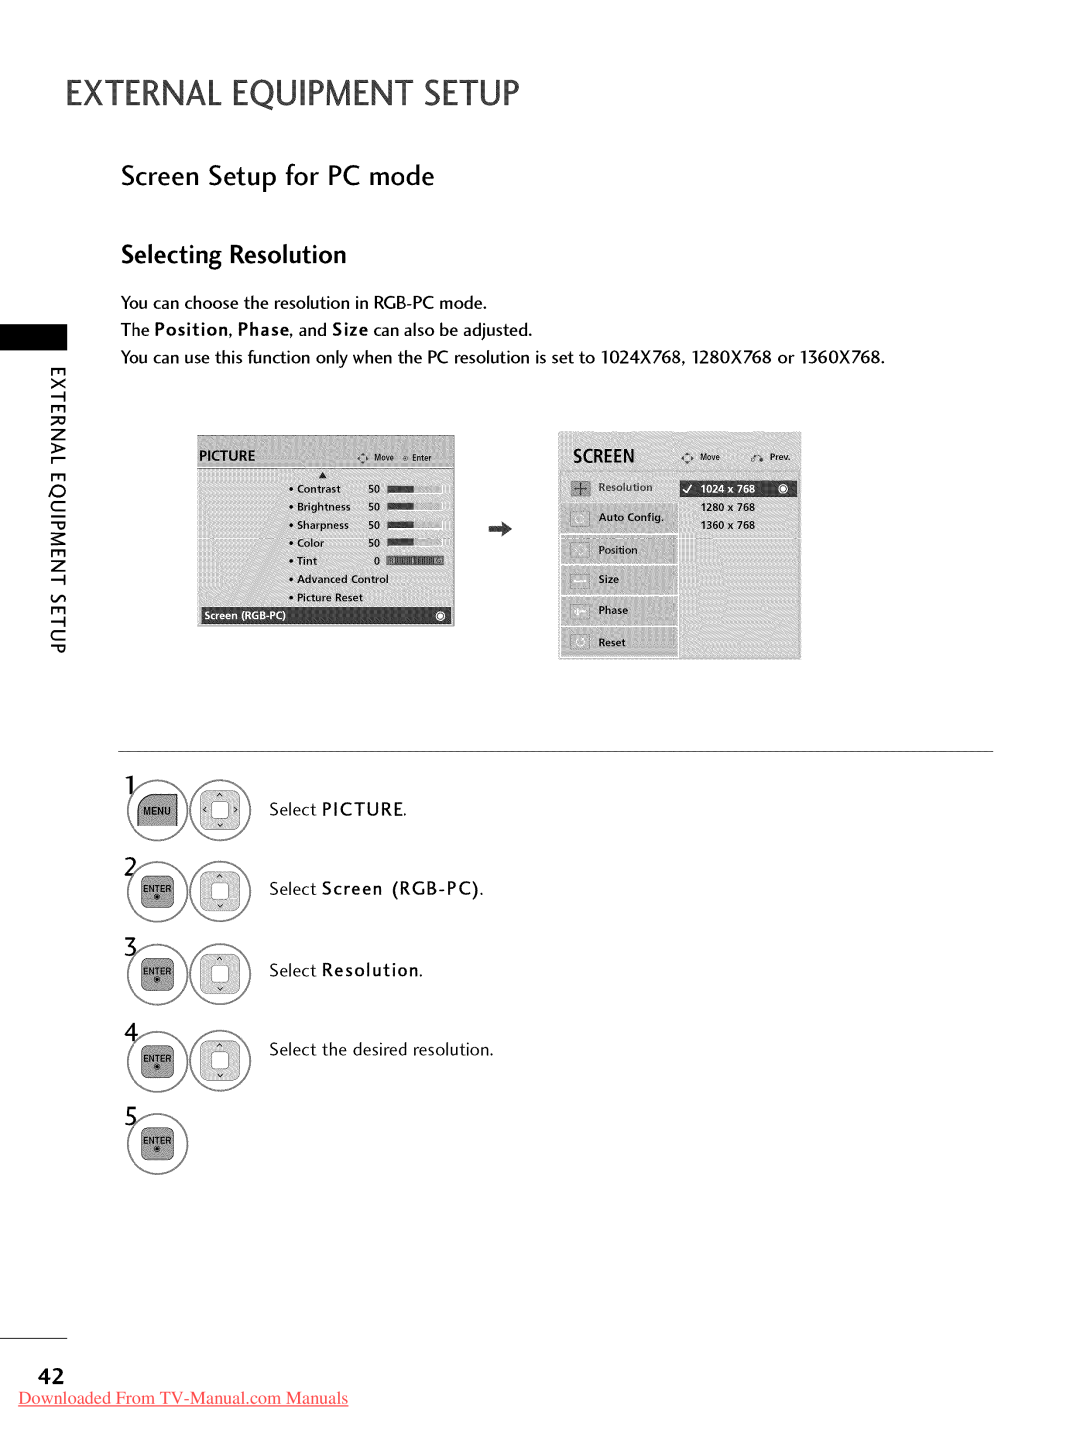 LG Electronics 32LD350, 47LD450, 47LD520, 47LD420 Externalequipment Setup, Screen Setup for PC mode, Selecting Resolution 